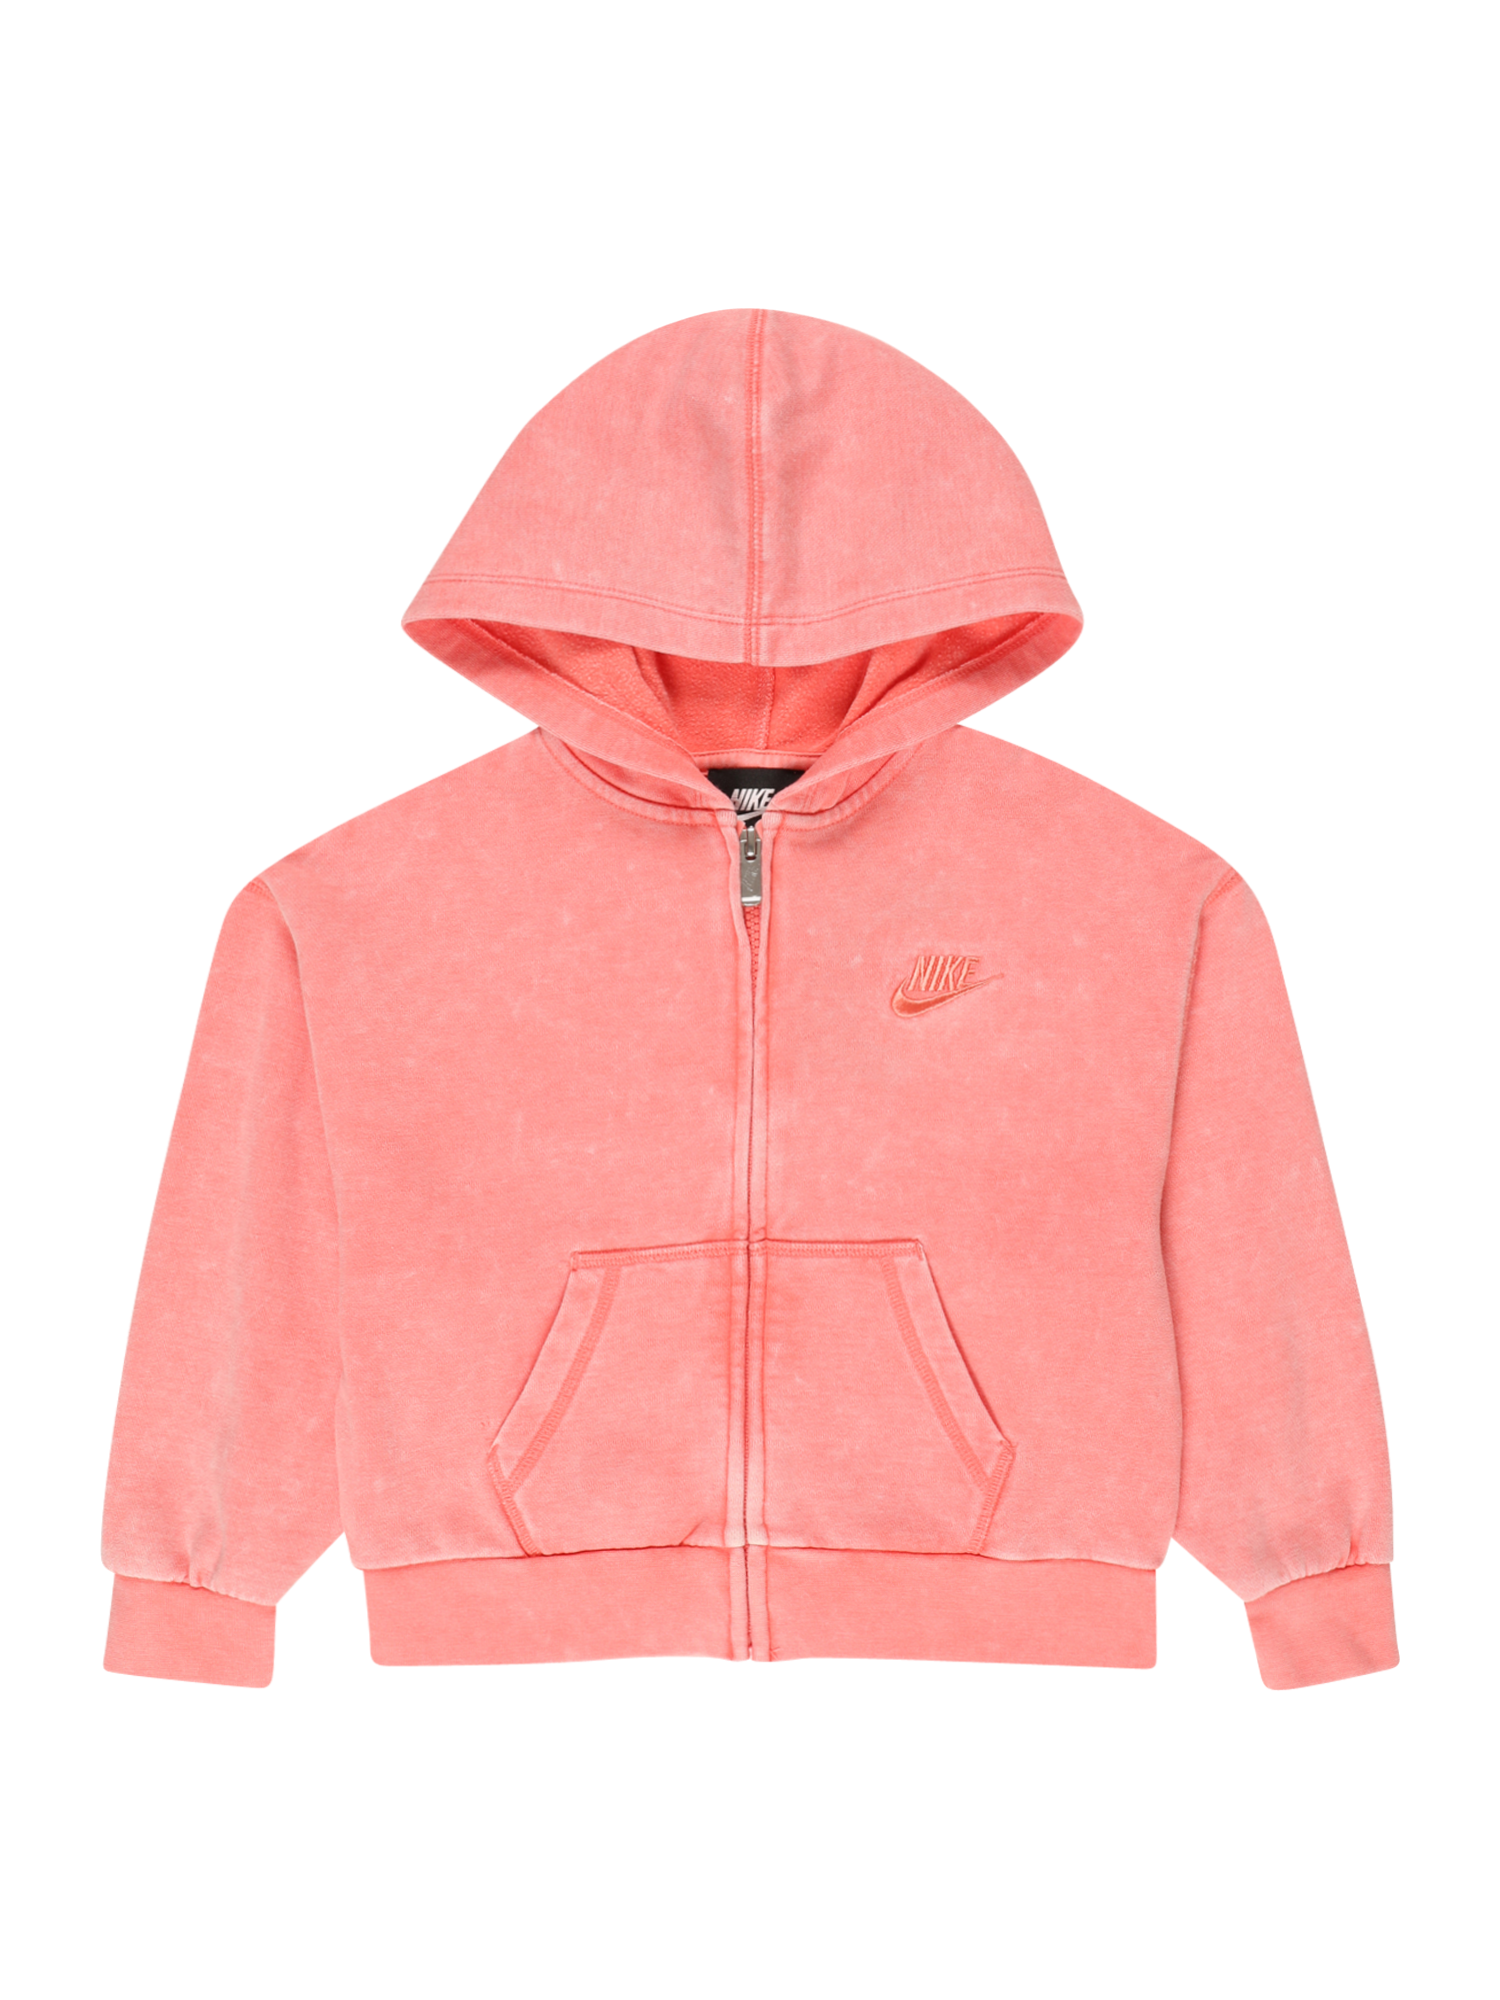 Bambina (taglie 92-140) Bambini Nike Sportswear Giacca di felpa in Rosa Antico 